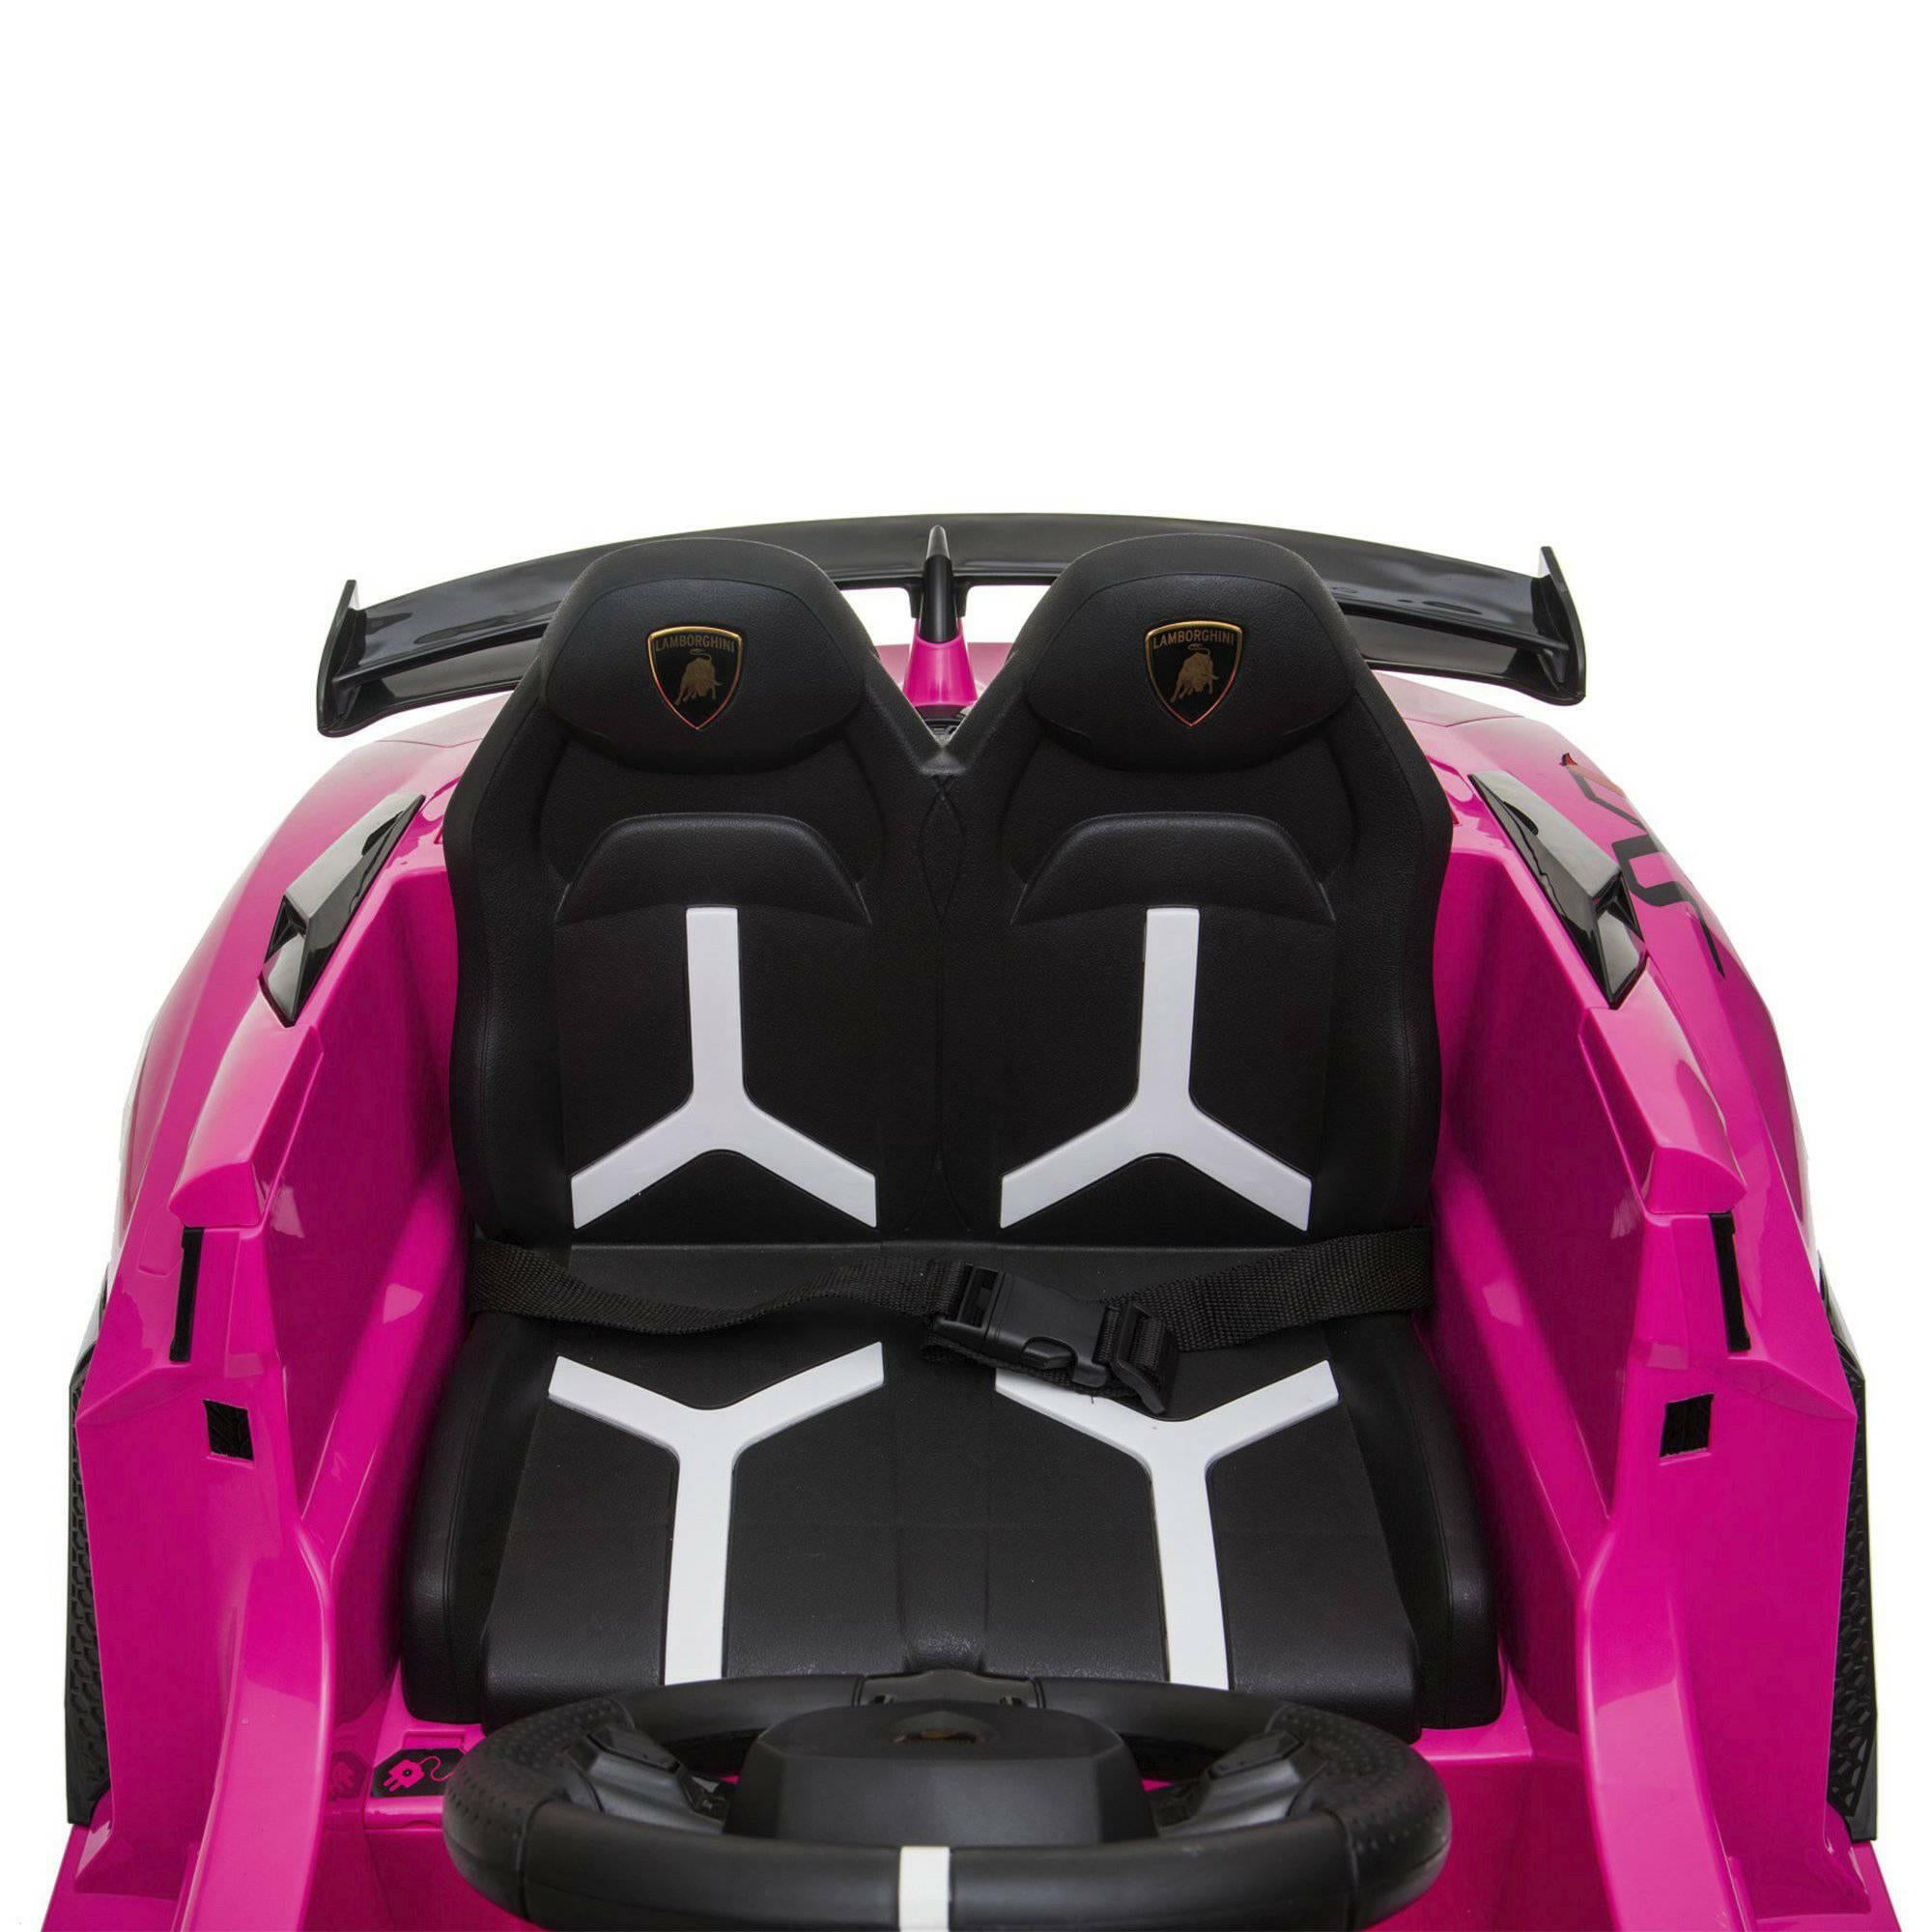 12V Lamborghini Aventador SVG Sports 1 Seater Ride on Car - Dti Direct USA